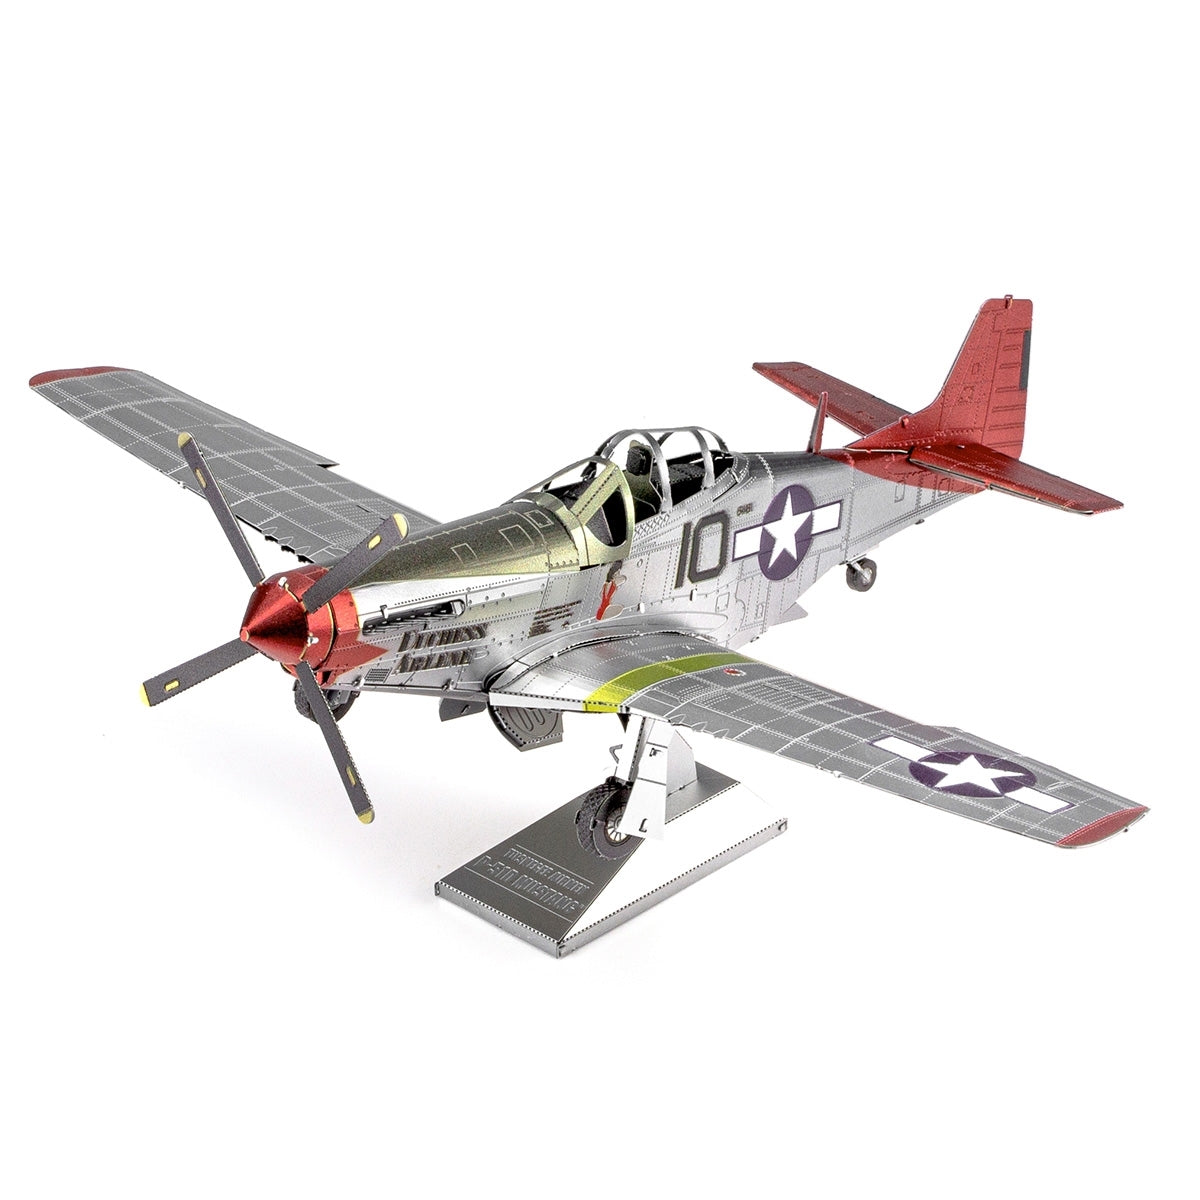 Metal Earth Premium Series ICONX: Tuskegee Airmen P-51D Mustang